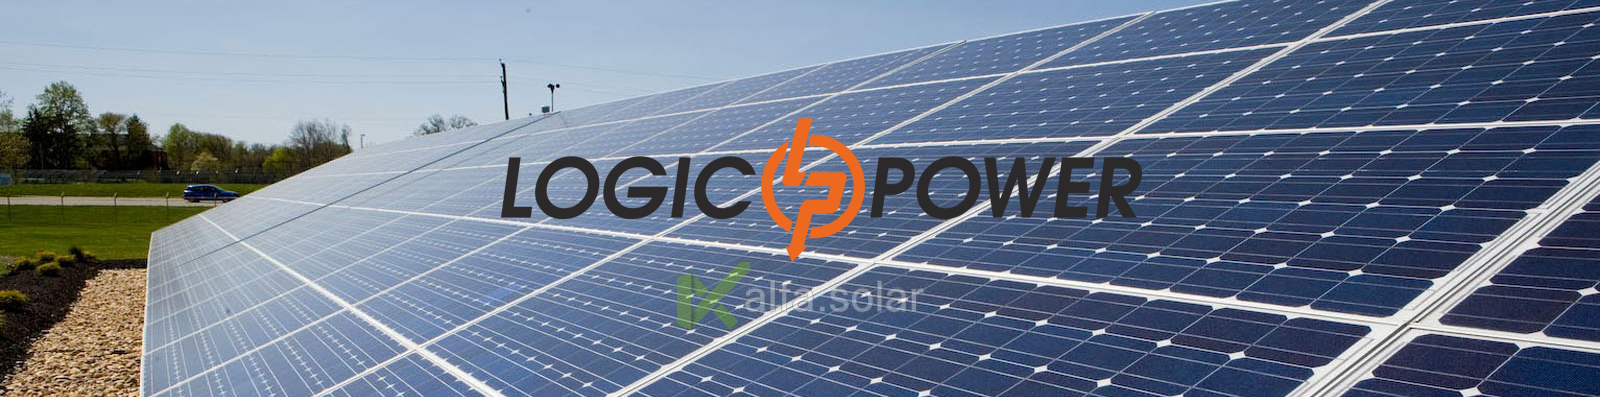 Logic Power logo